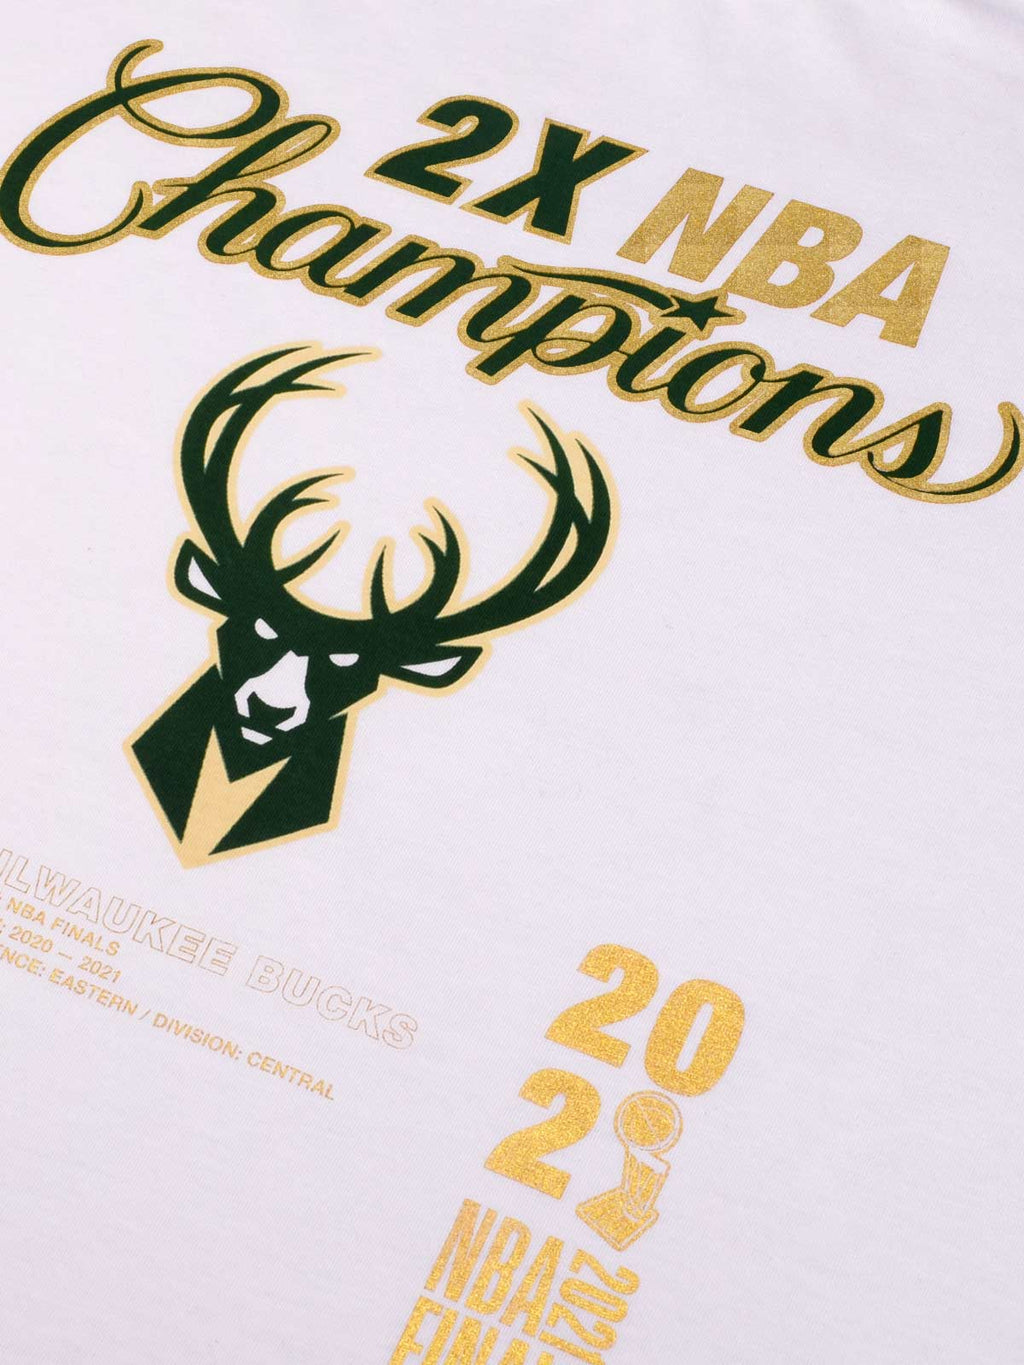 Milwaukee Bucks 2021 NBA Champions Shirt Size Large – Yesterday's